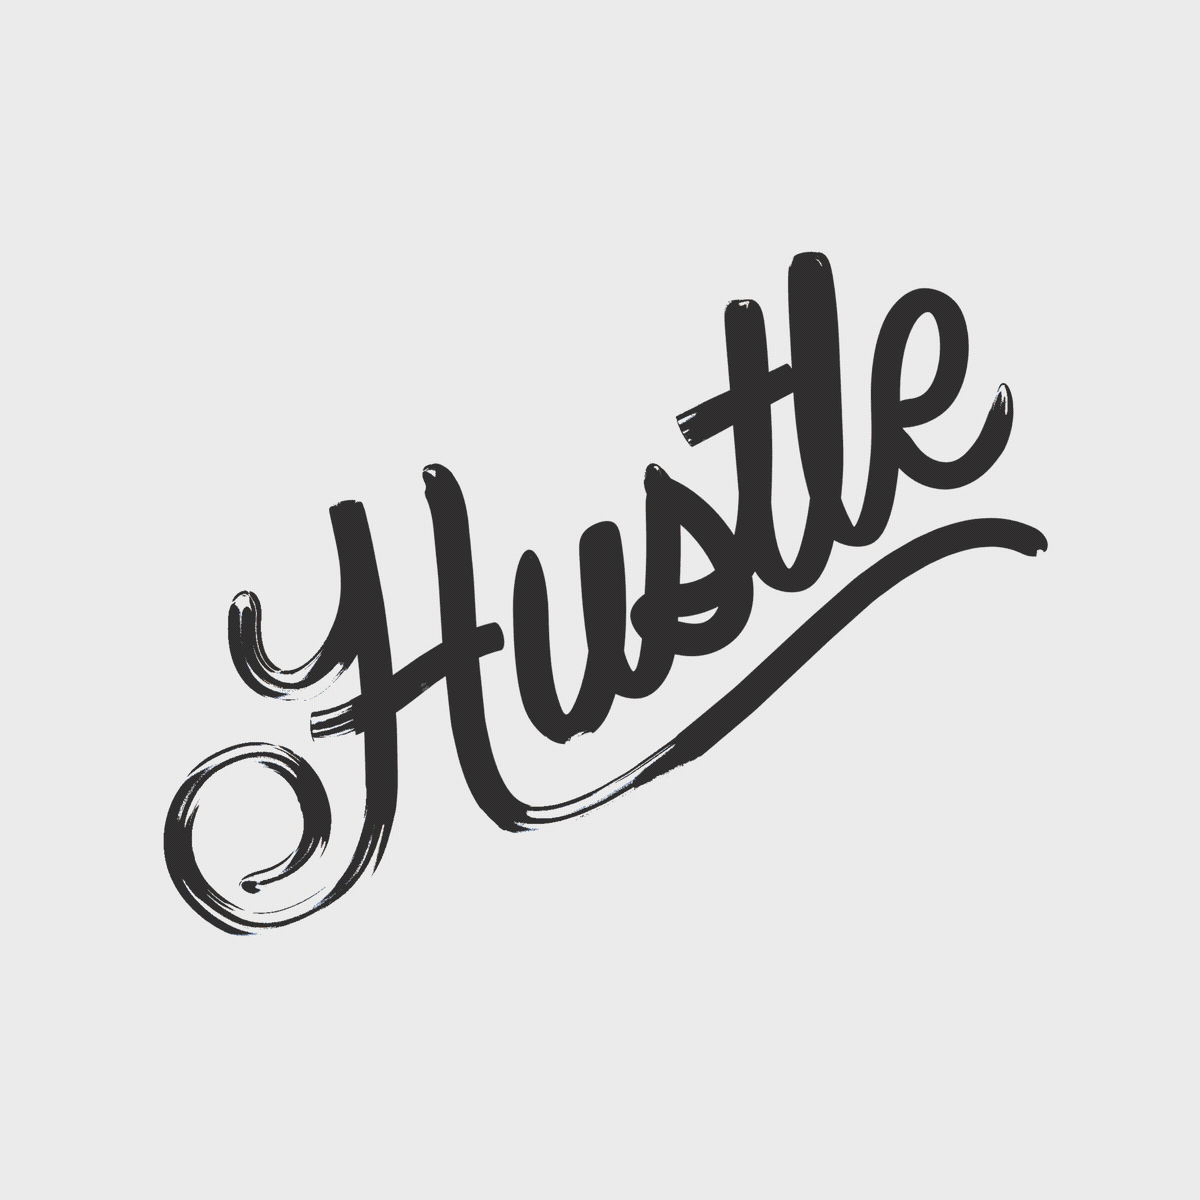 New Breed of Hustle by Matheus Meneghel on Dribbble